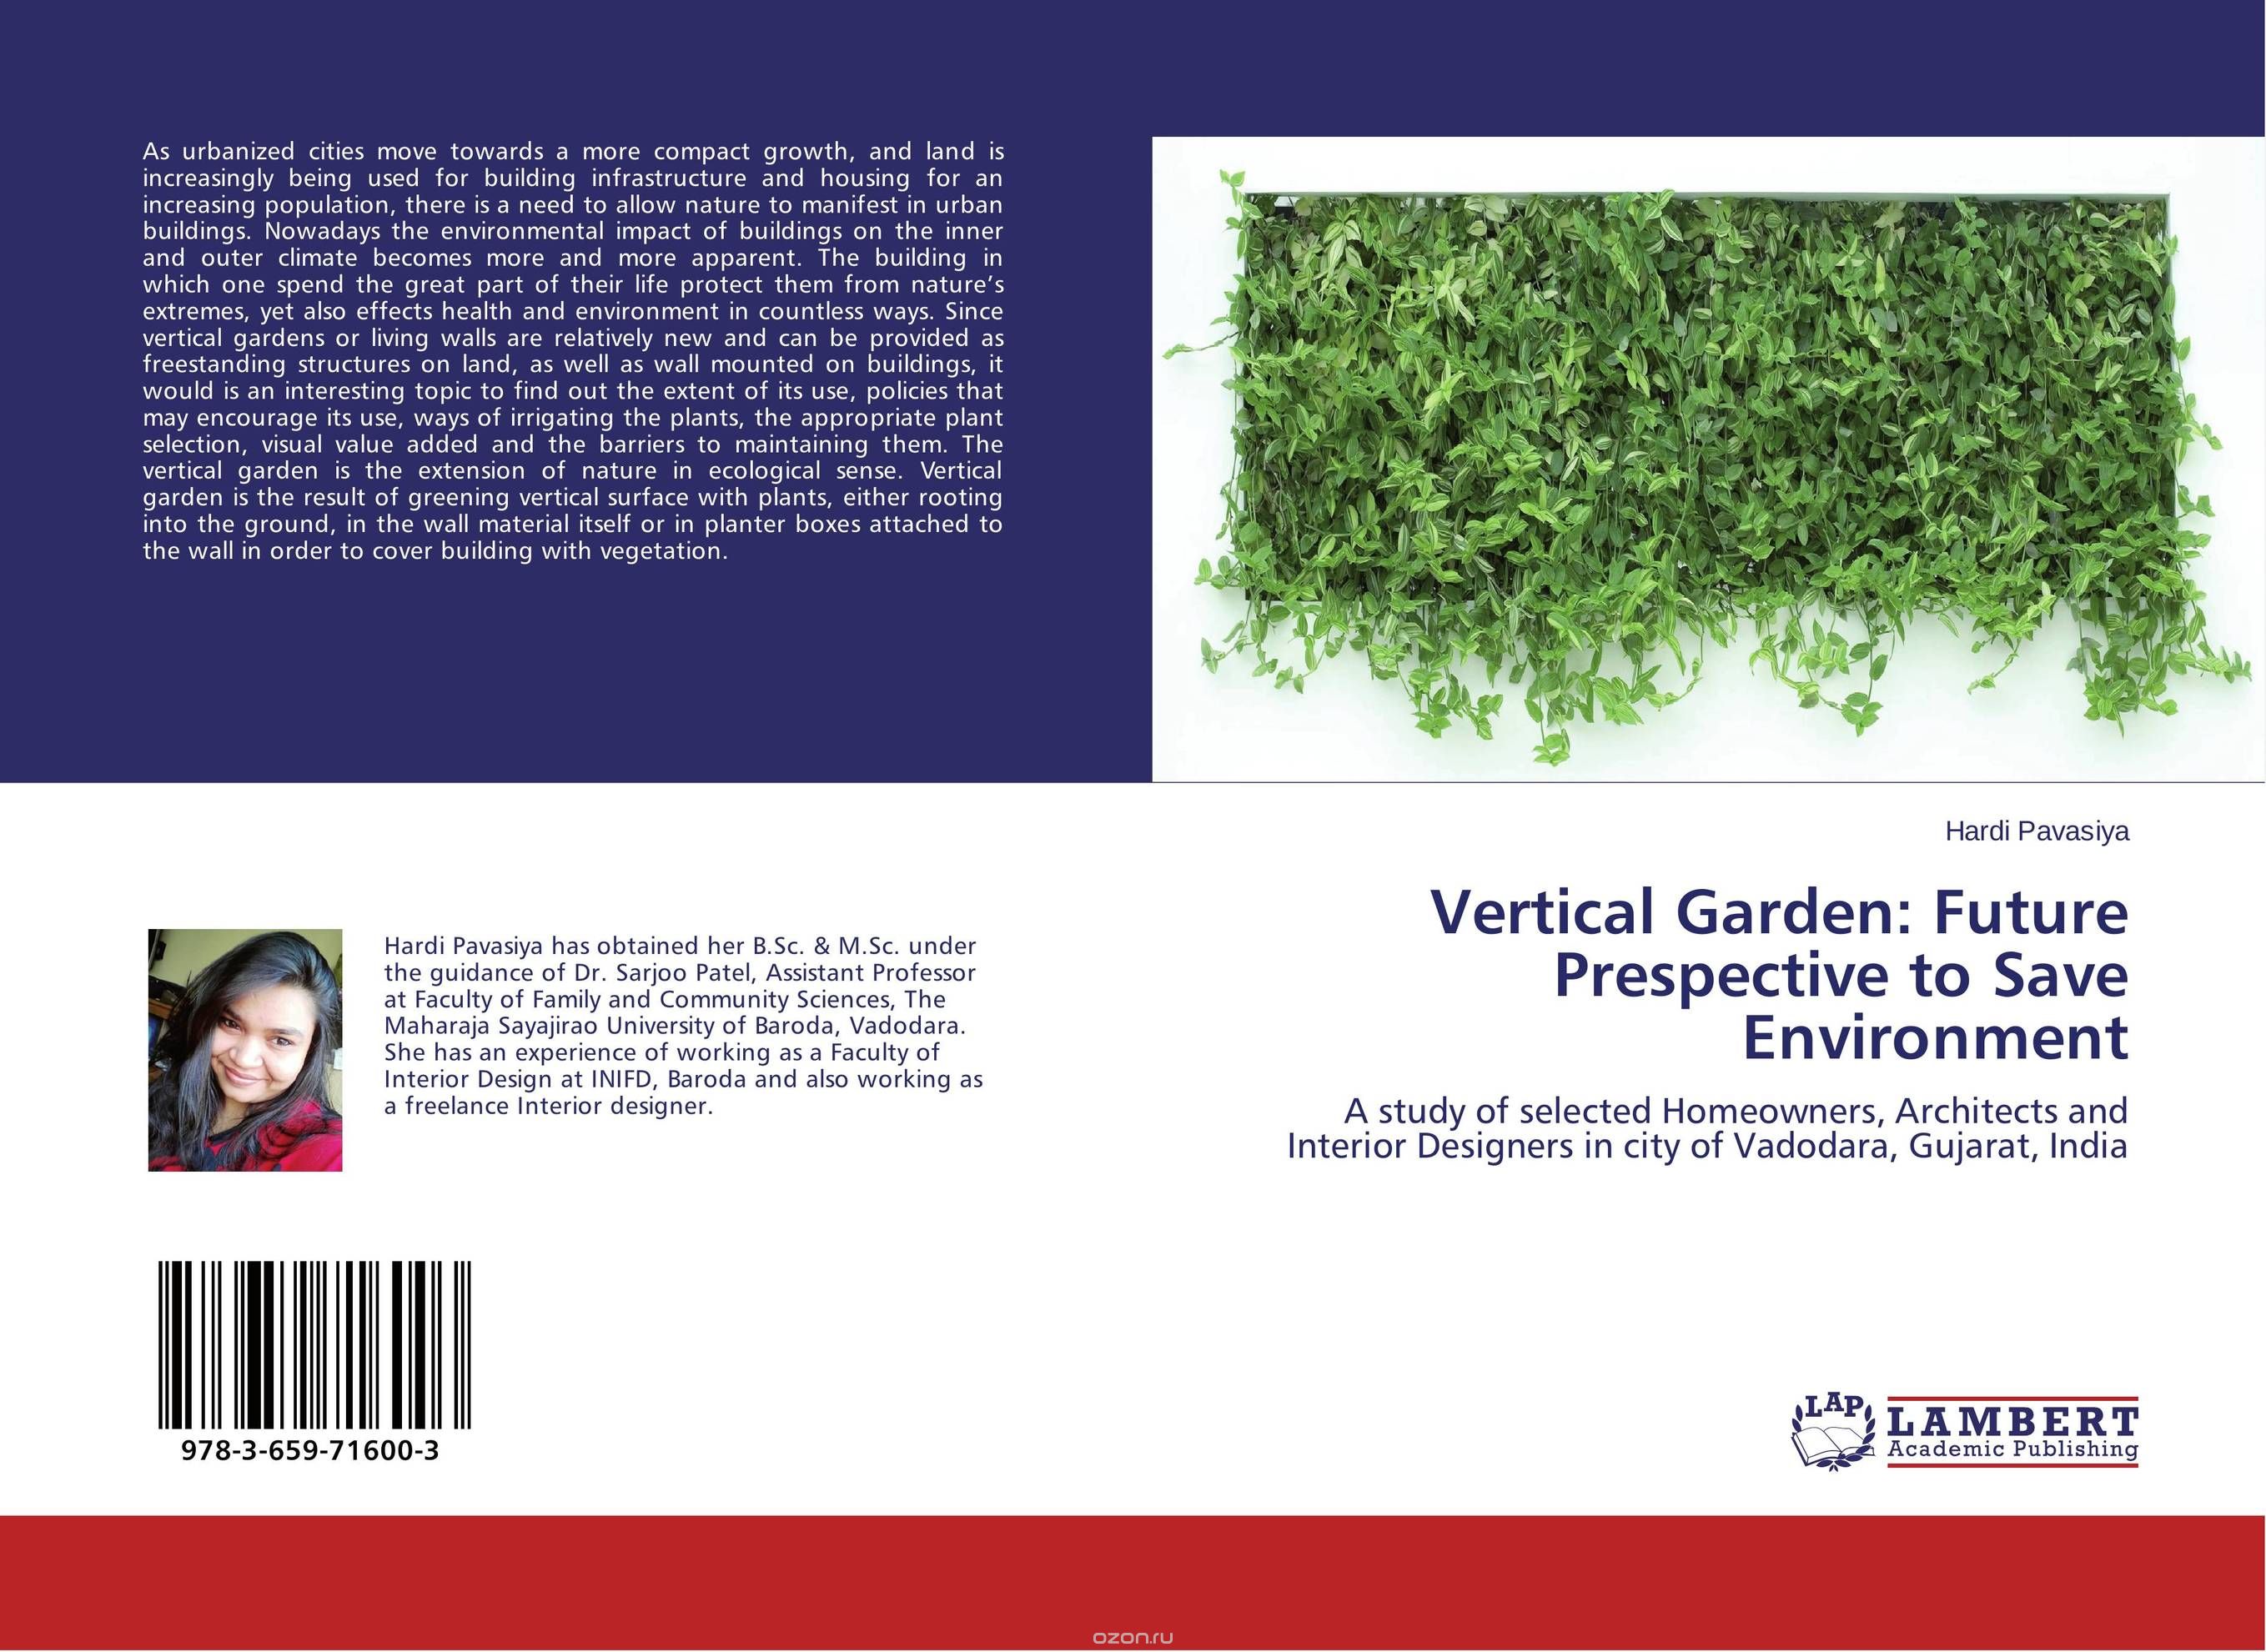 Скачать книгу "Vertical Garden: Future Prespective to Save Environment"